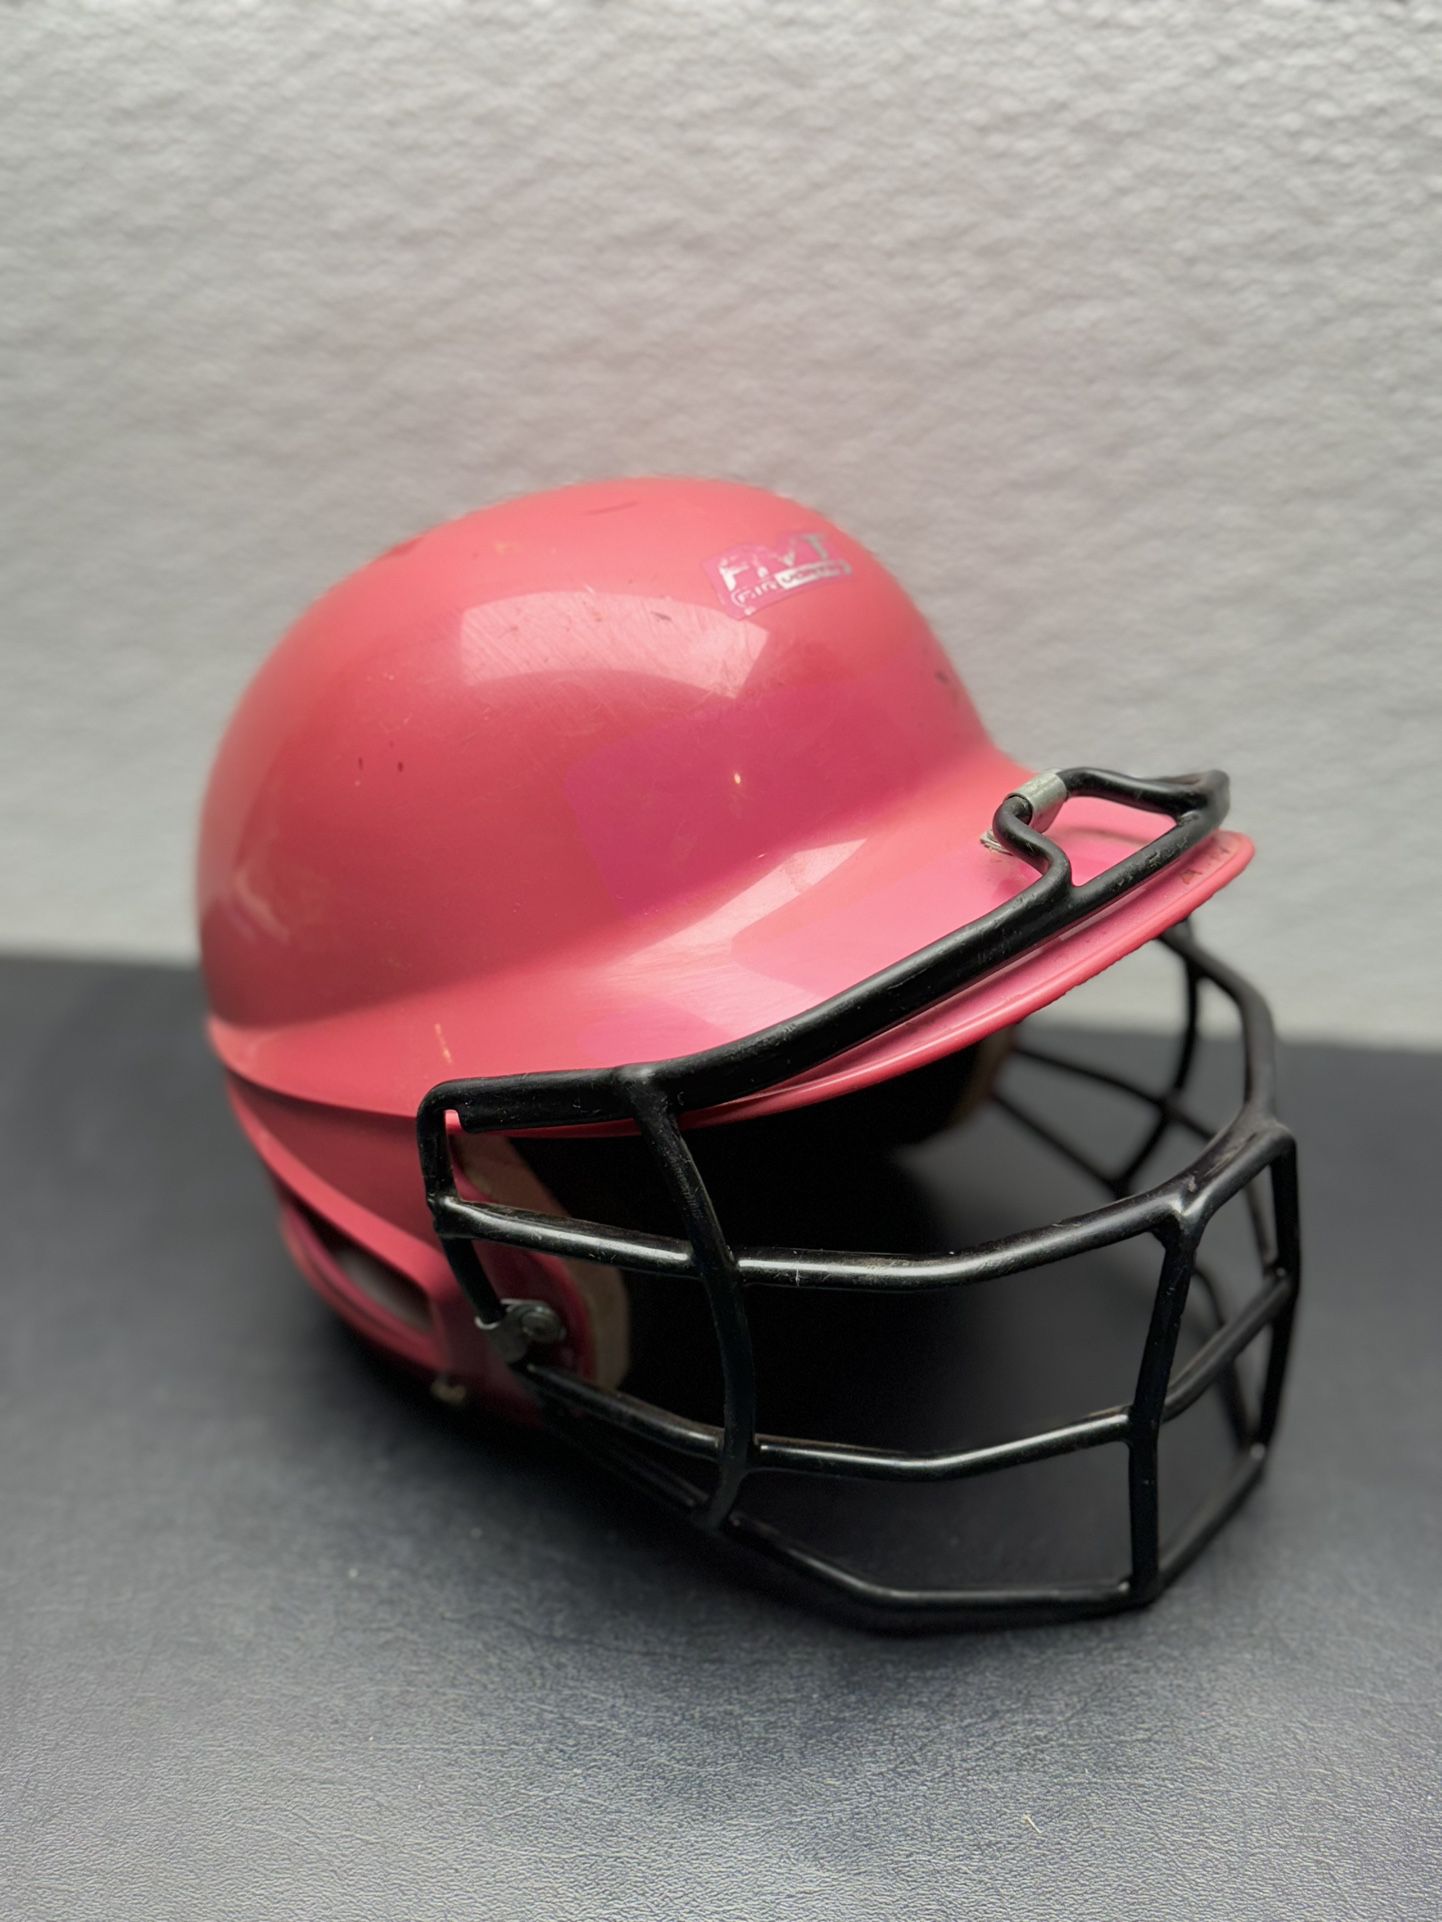 Rawlings Youth AVTTB Baseball/Softball Batting Helmet 